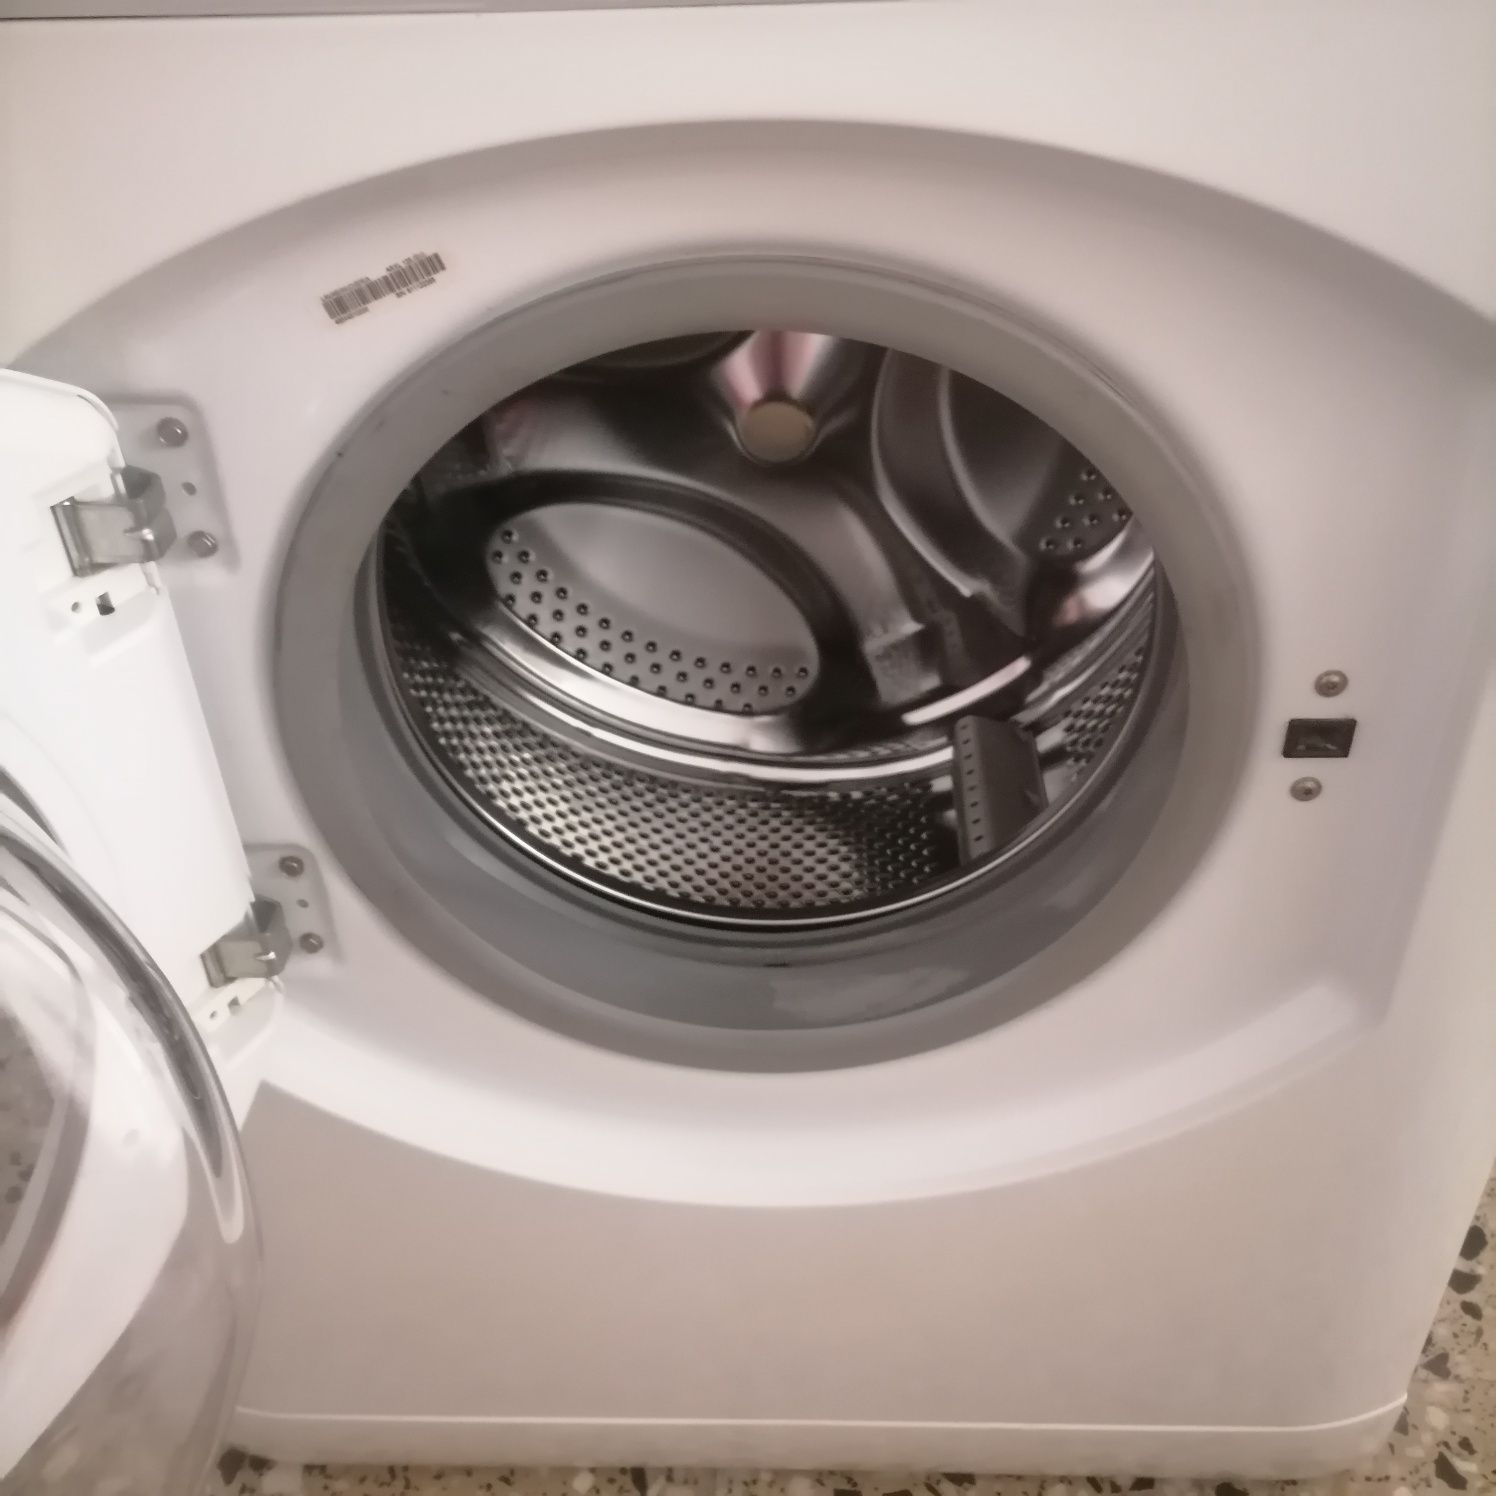 Máquina de lavar roupa hotpoint ariston 6 kg